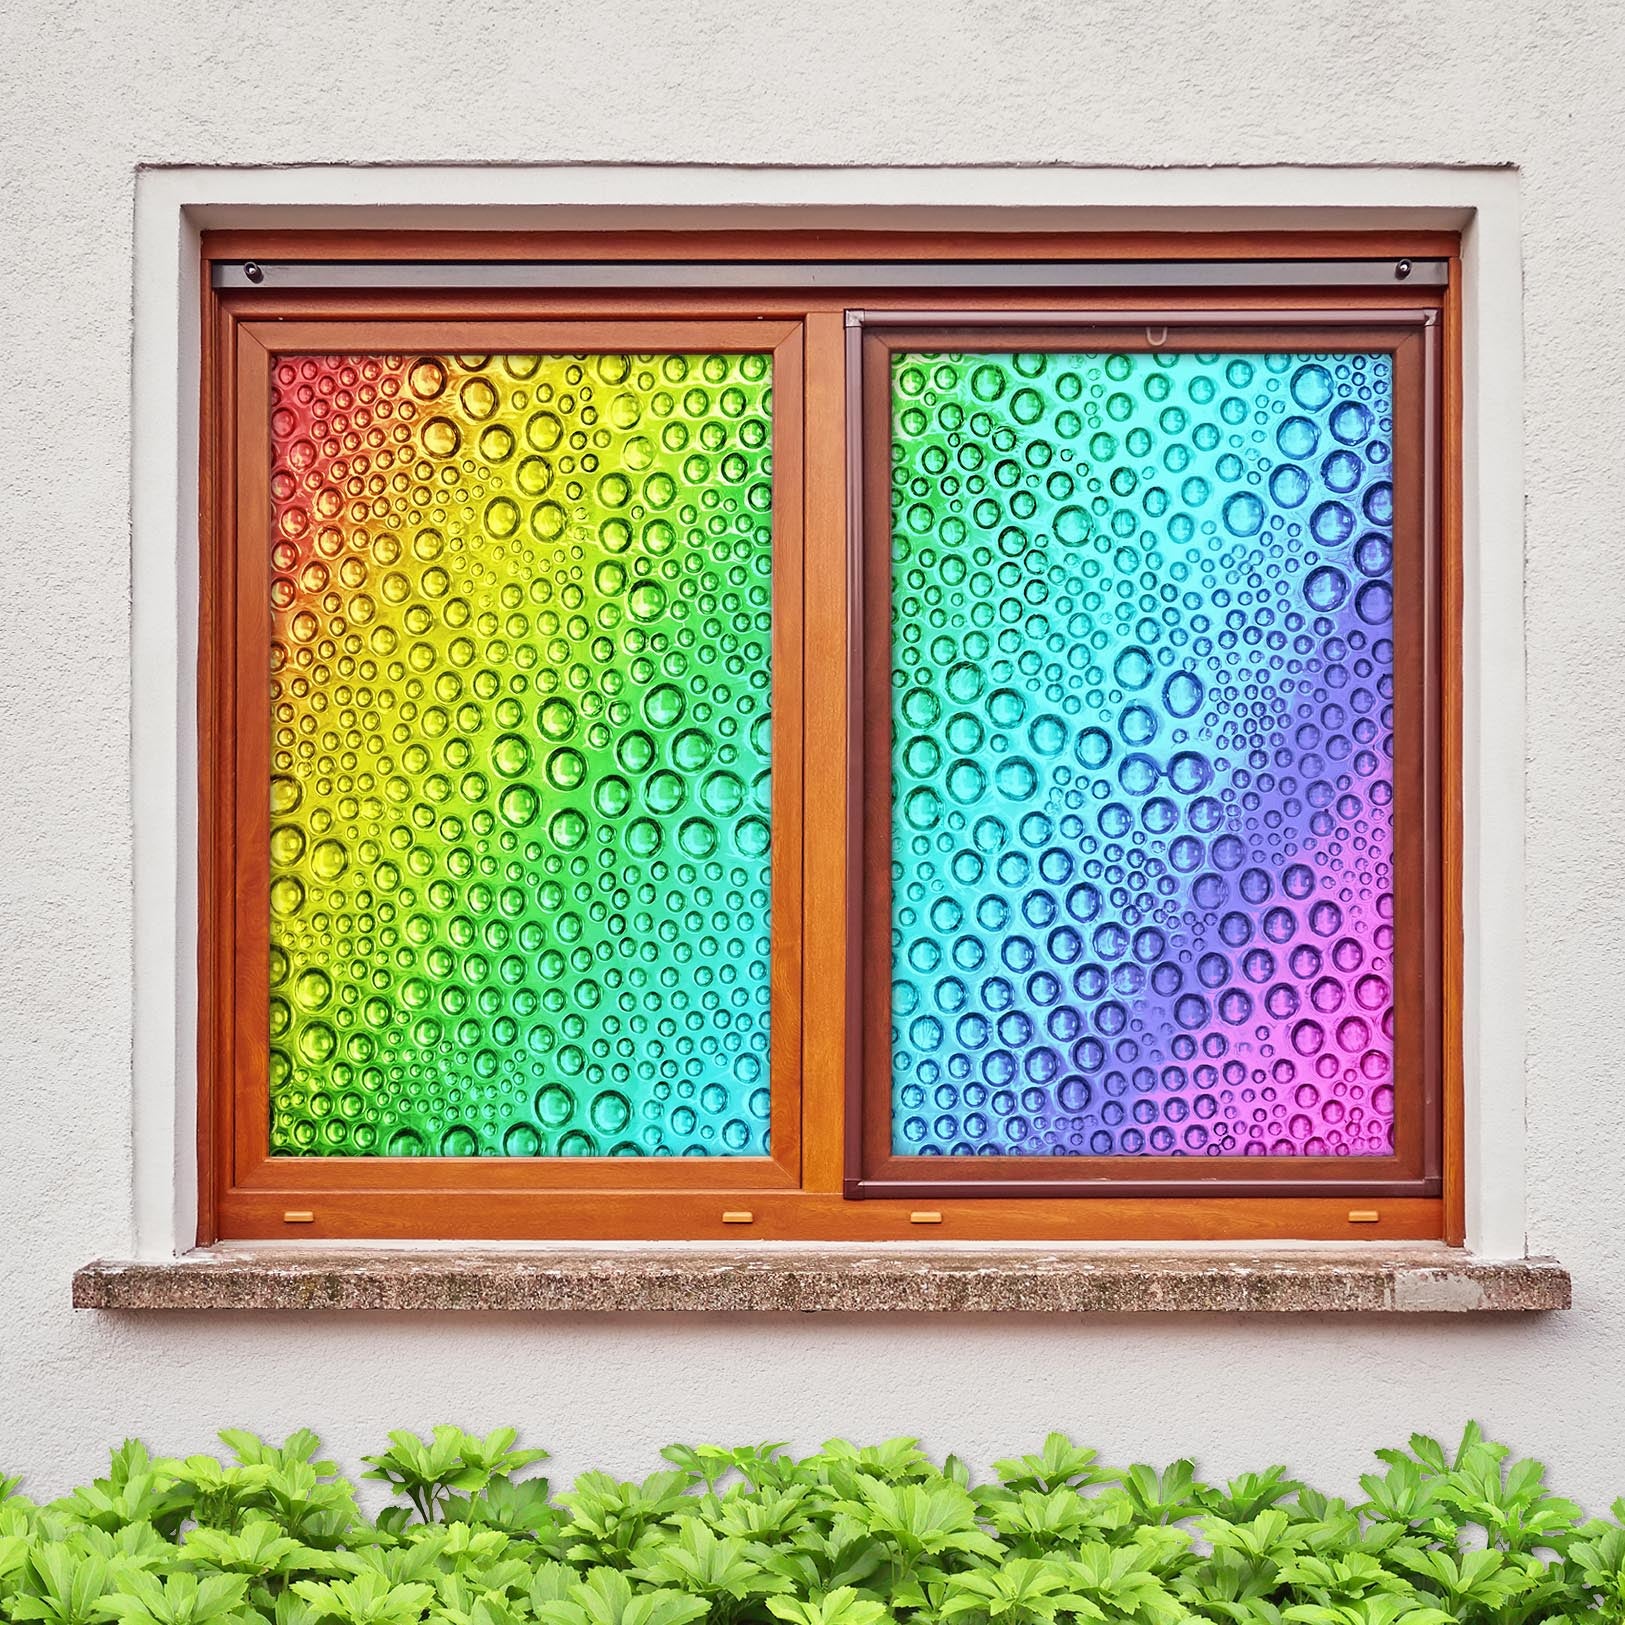 3D Rainbow Water Droplets 270 Window Film Print Sticker Cling Stained Glass UV Block